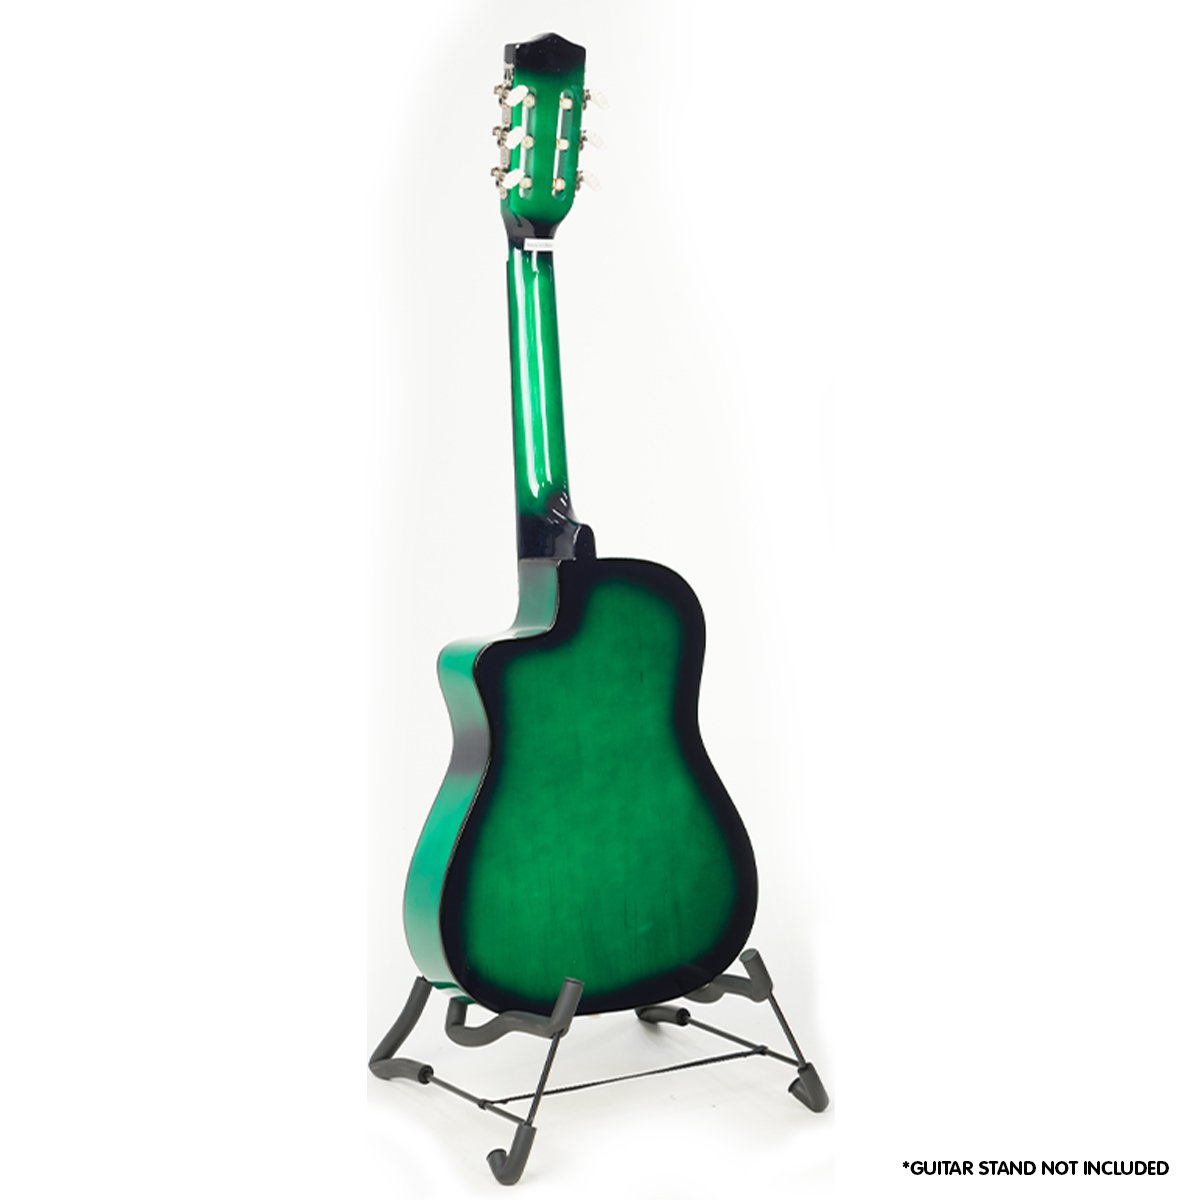 Karrera Childrens Acoustic Guitar Kids - Green - SILBERSHELL